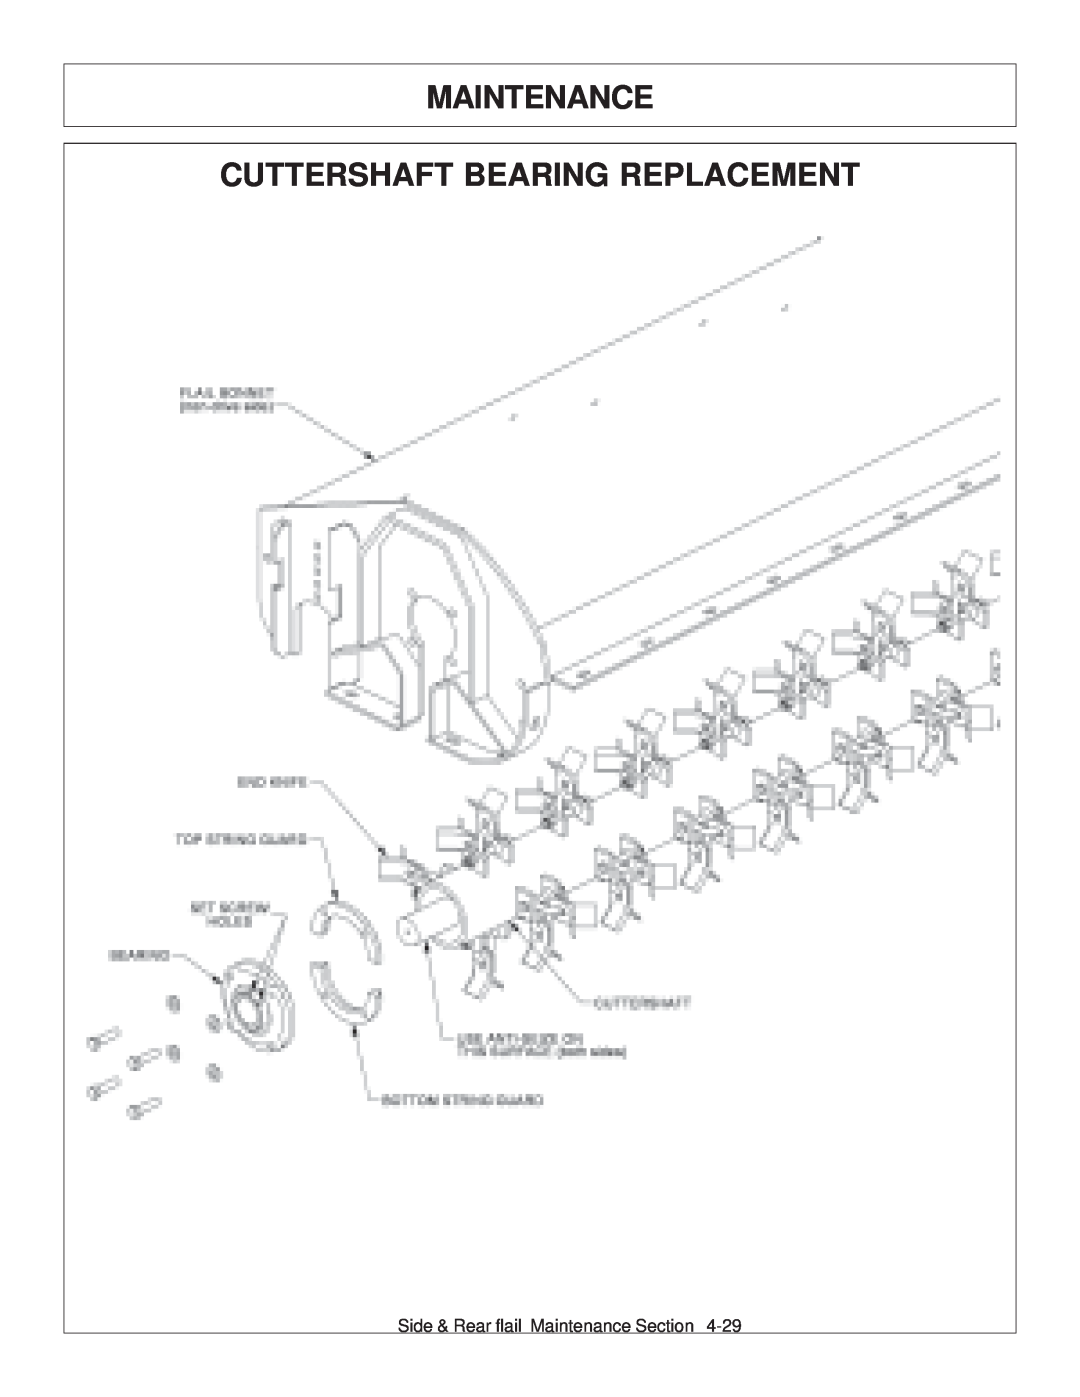 Tiger JD 5083E, JD 5101E, JD 5093E manual Maintenance Cuttershaft Bearing Replacement, Side & Rear flail Maintenance Section 